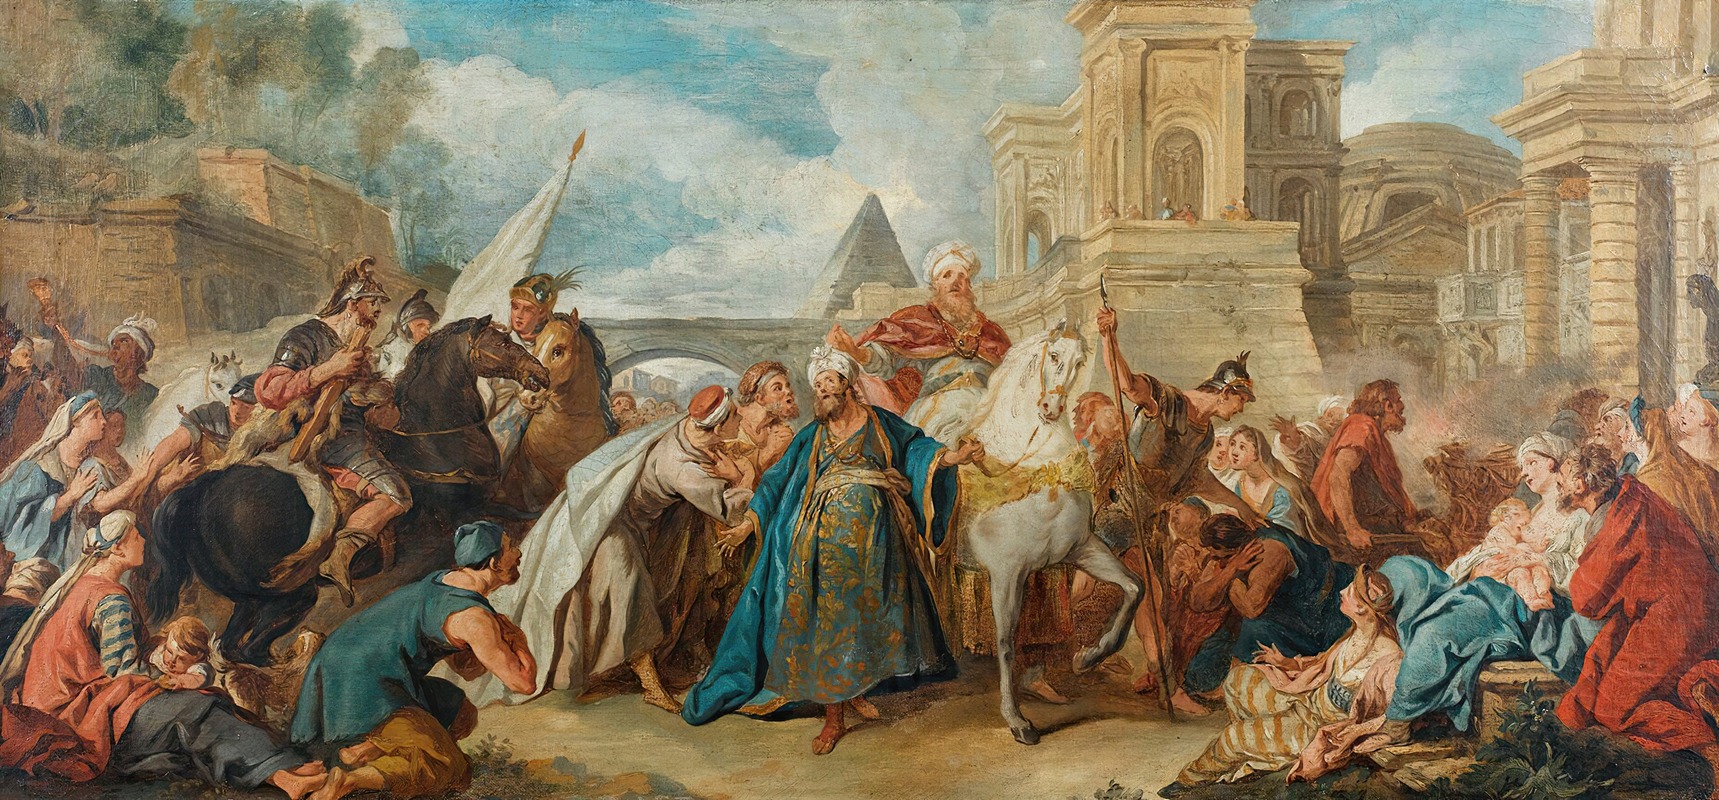 Follower of Jean-François de Troy - The triumph of Mordecai